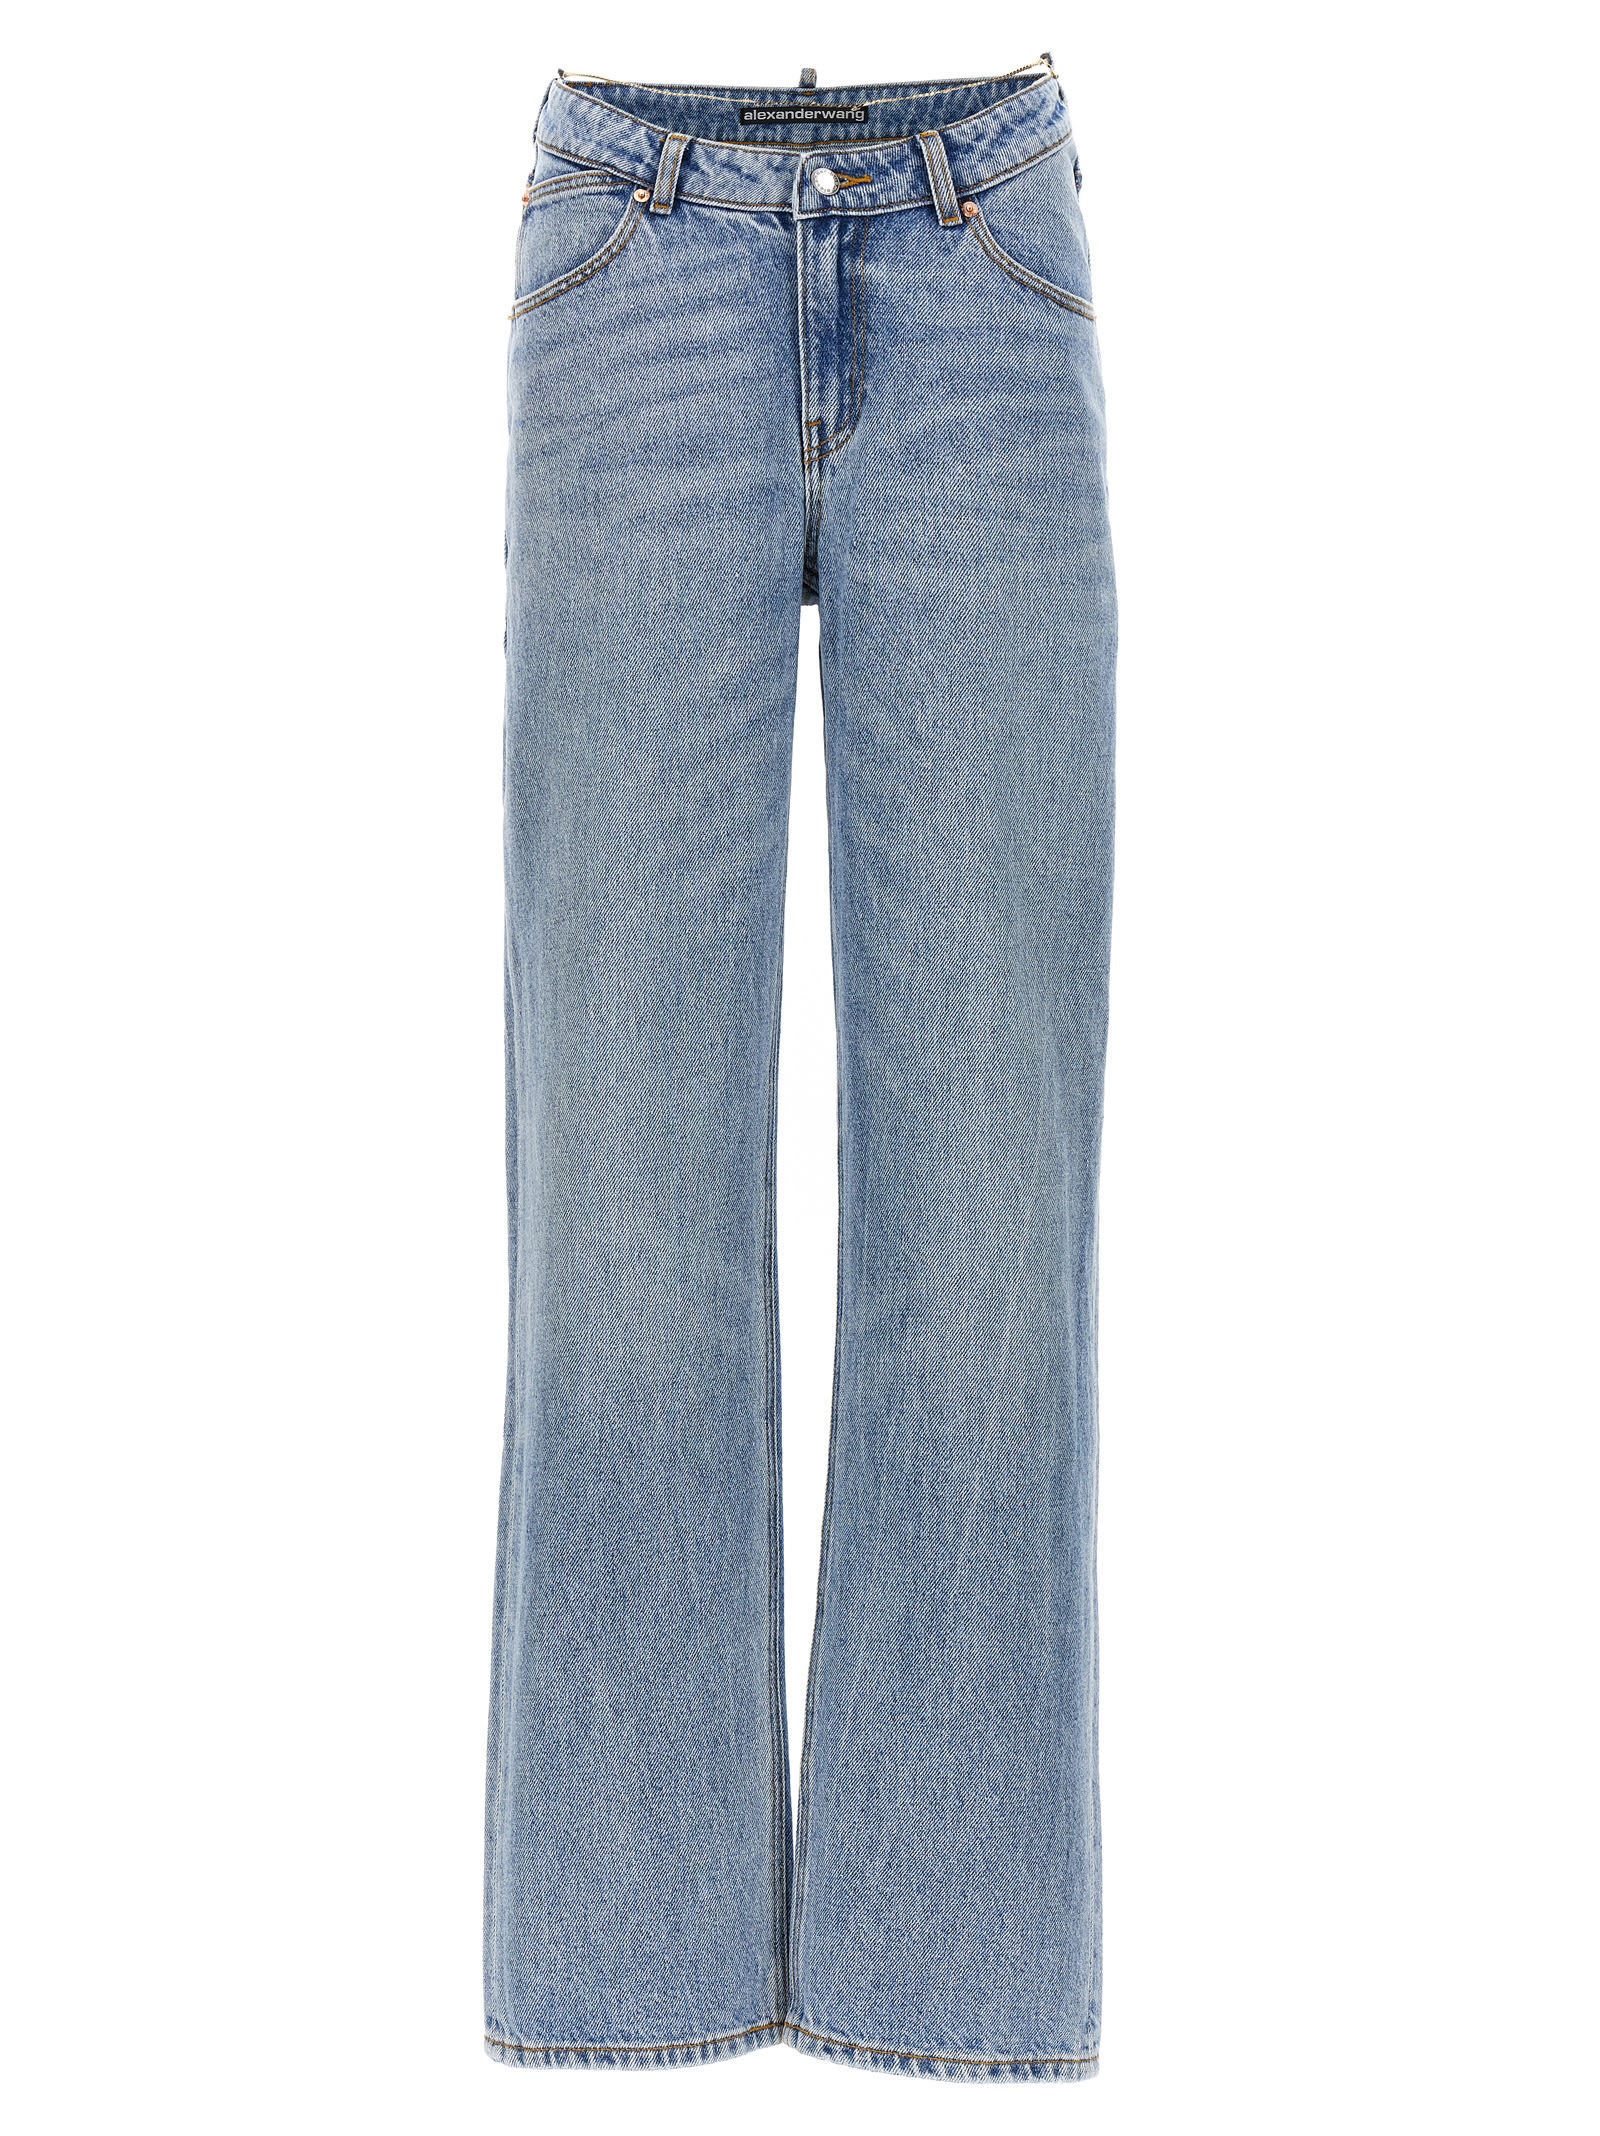 Shop Alexander Wang V Front Jeans In 471a Vintage Faded Indigo